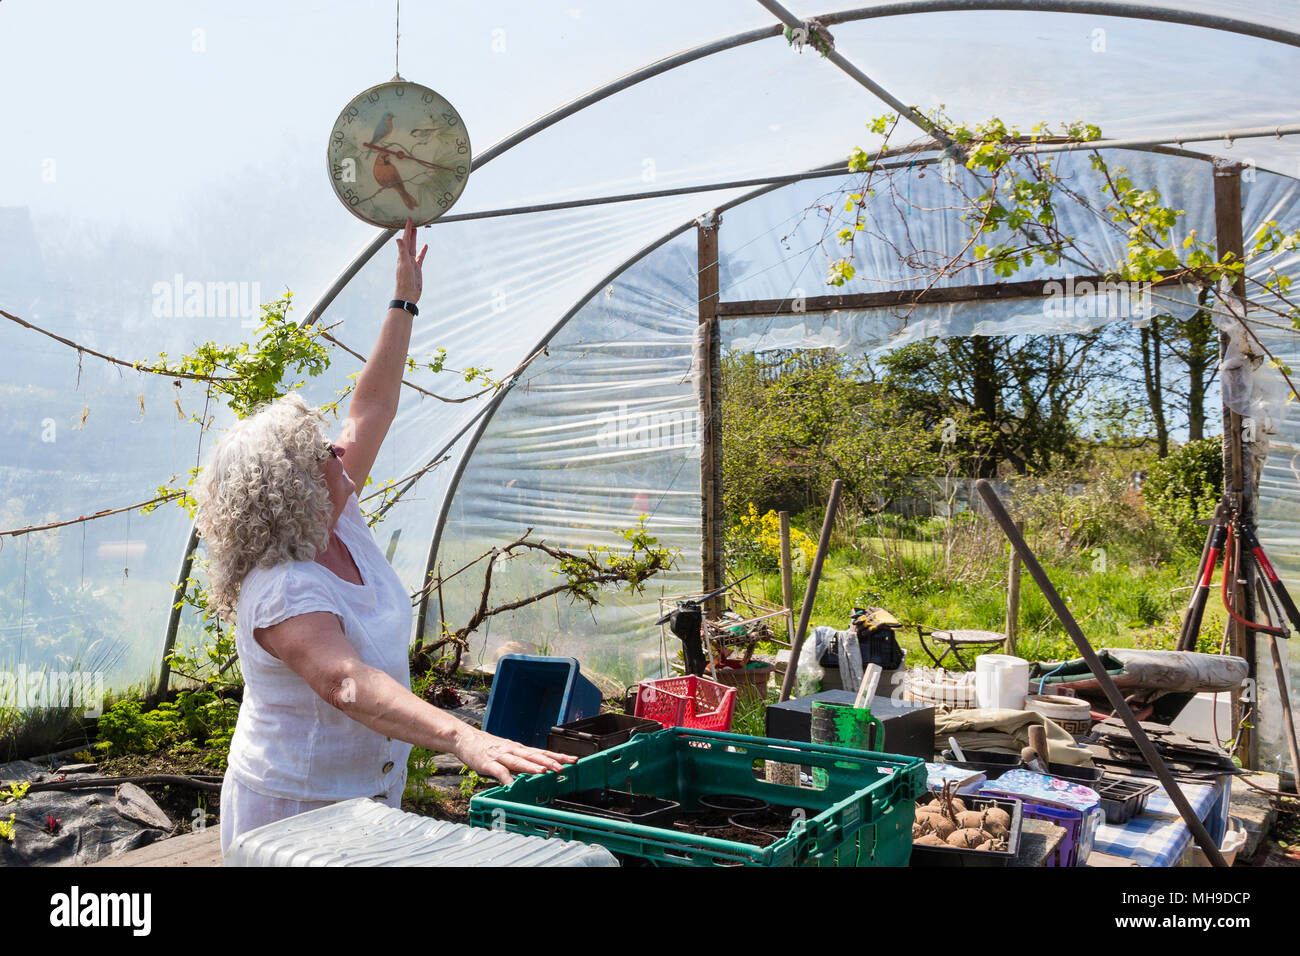 Older woman gardening in polytunnel Stock Photo